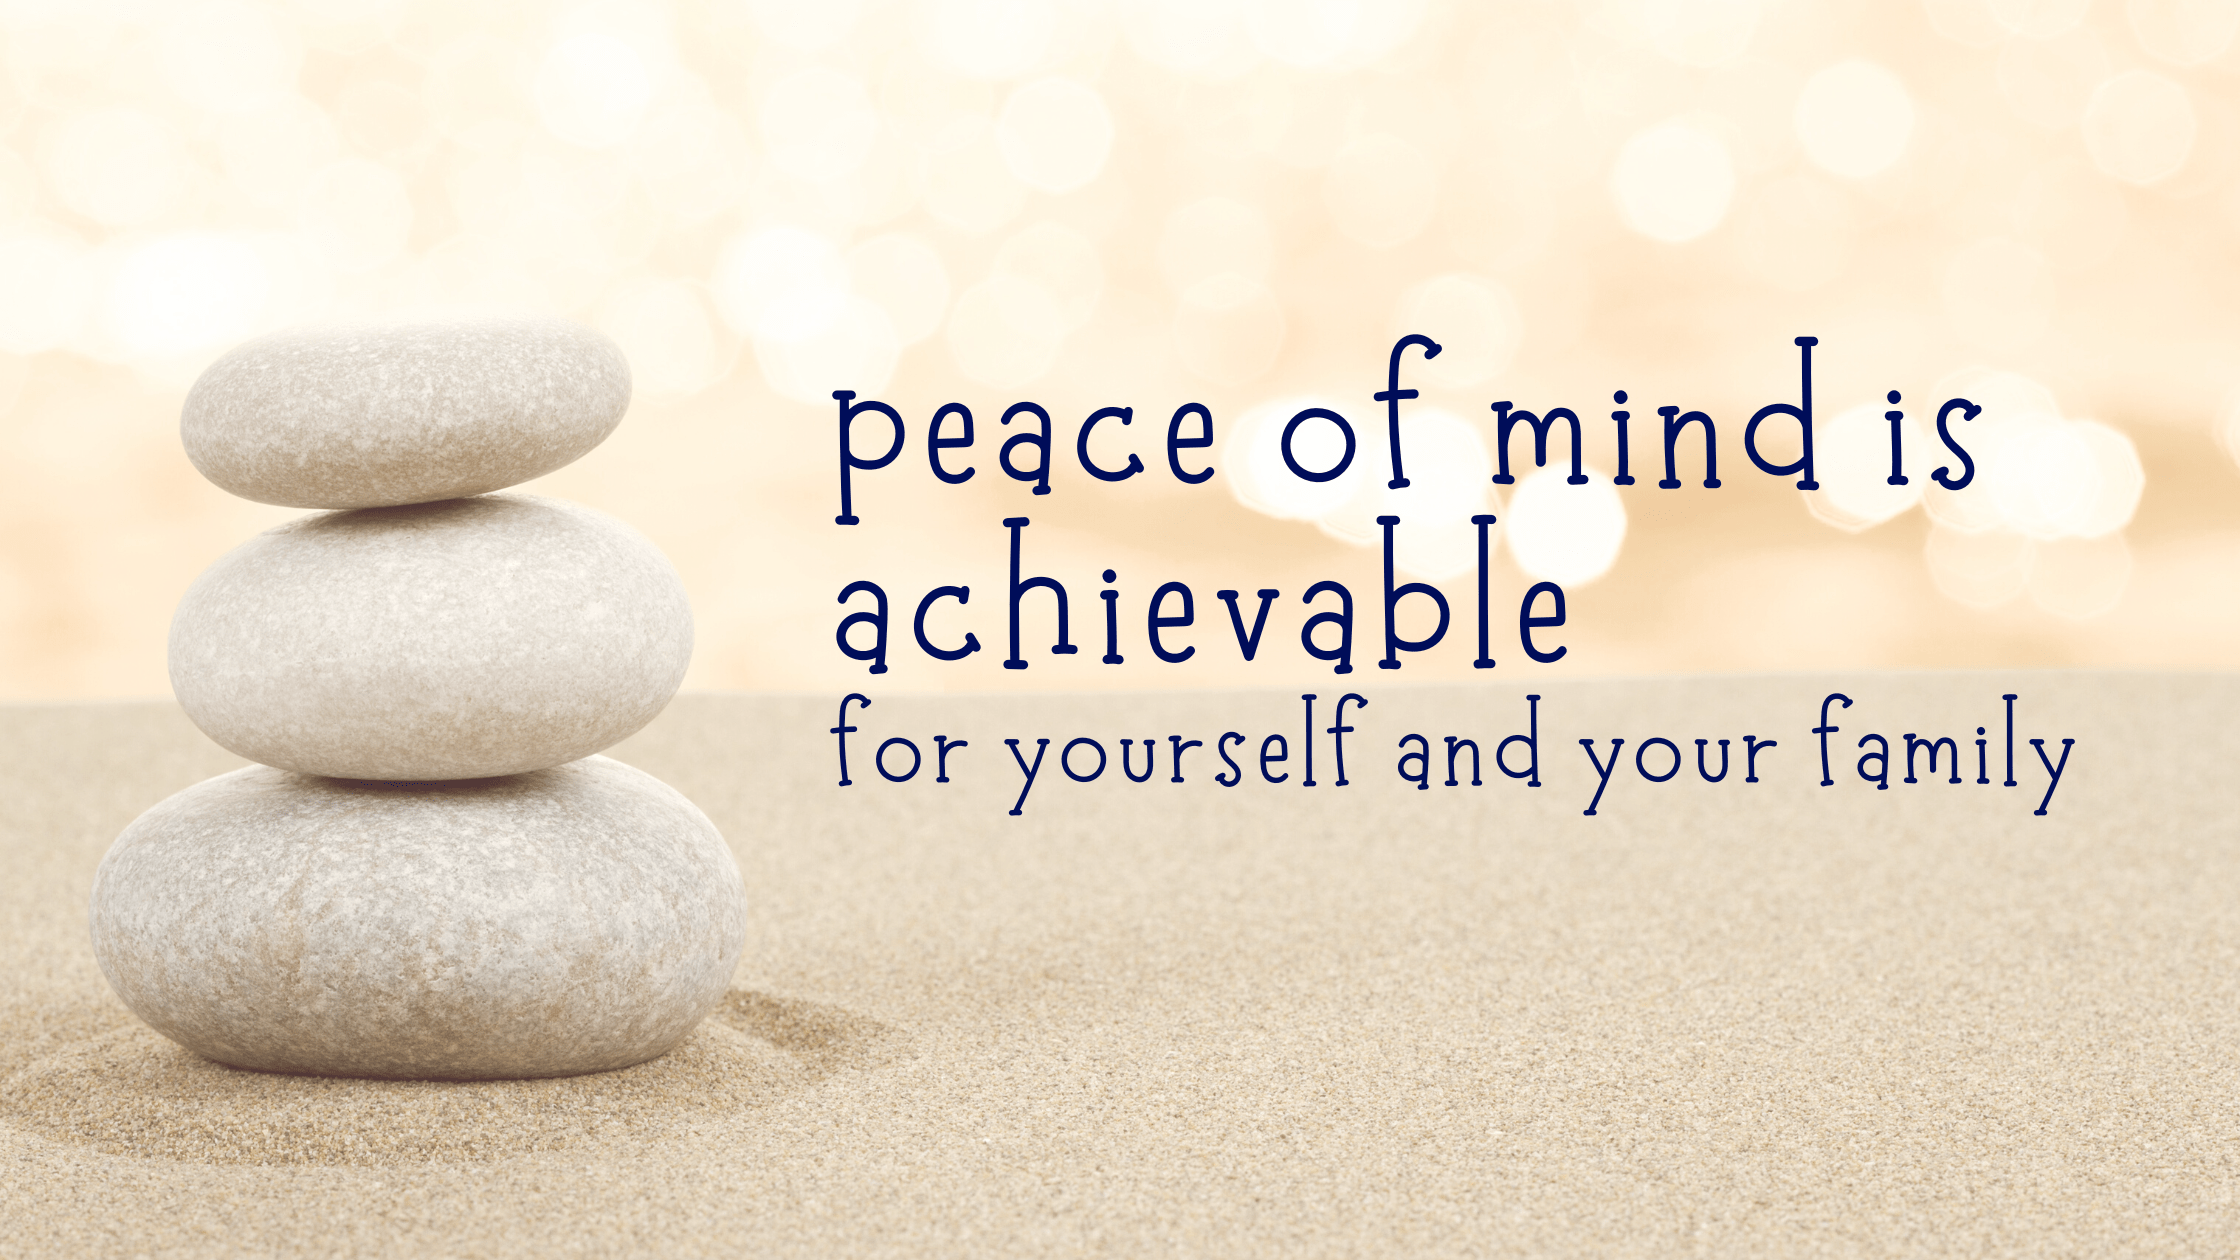 peace of mind, how to get peace of mind, how to achieve peace of mind, is peace of mind important, get peace of mind